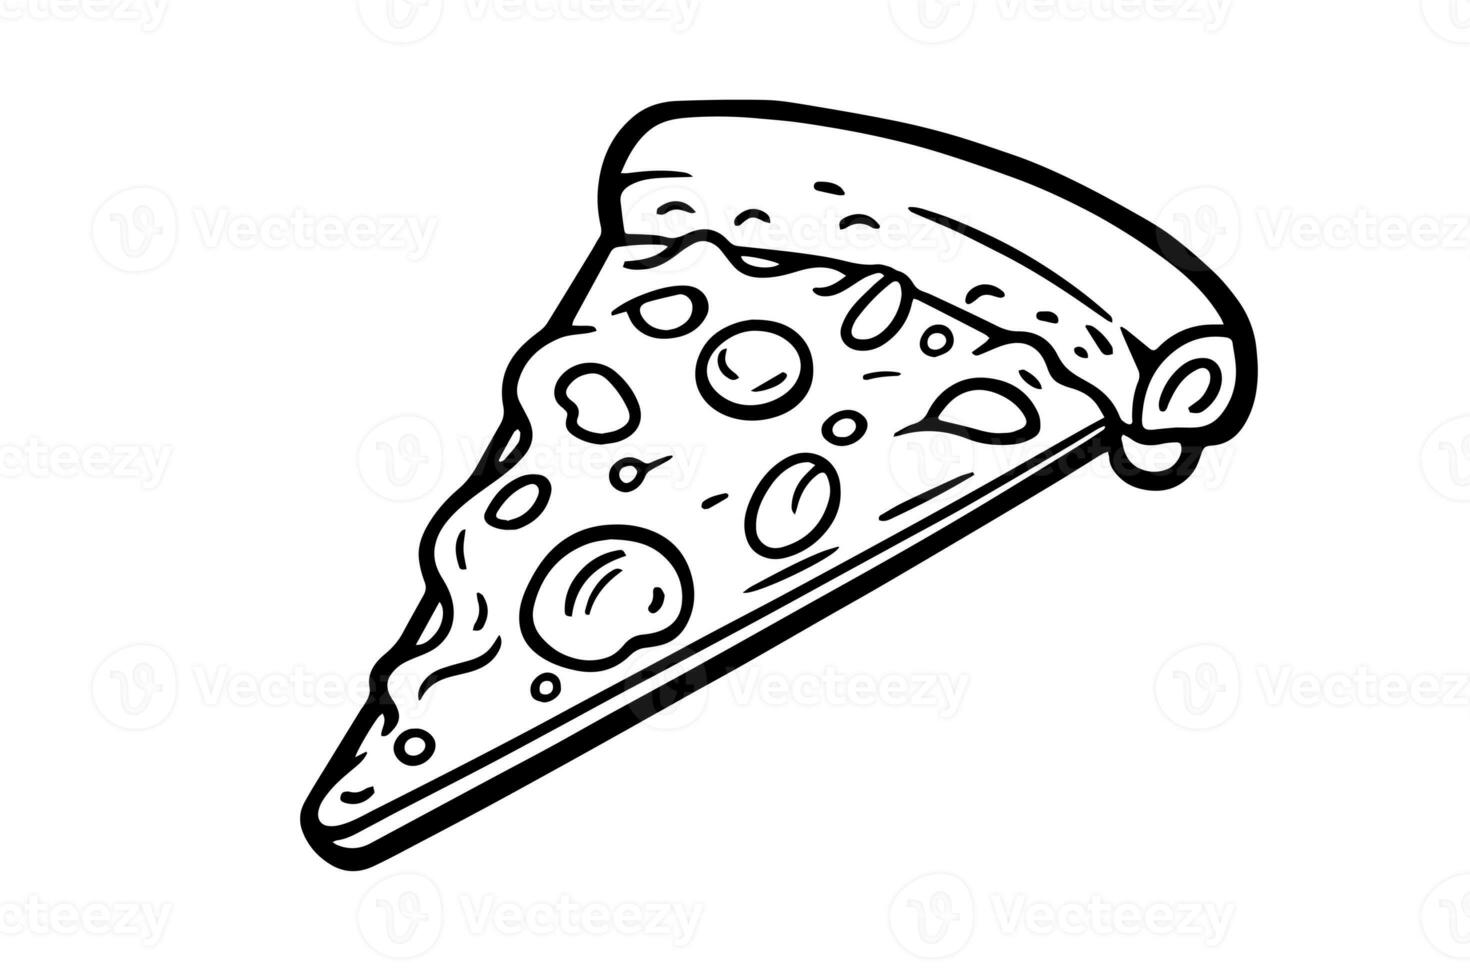 Slice of pizza lover ink sketch. Engraving style vector illustration. Art for print, design, banner. photo